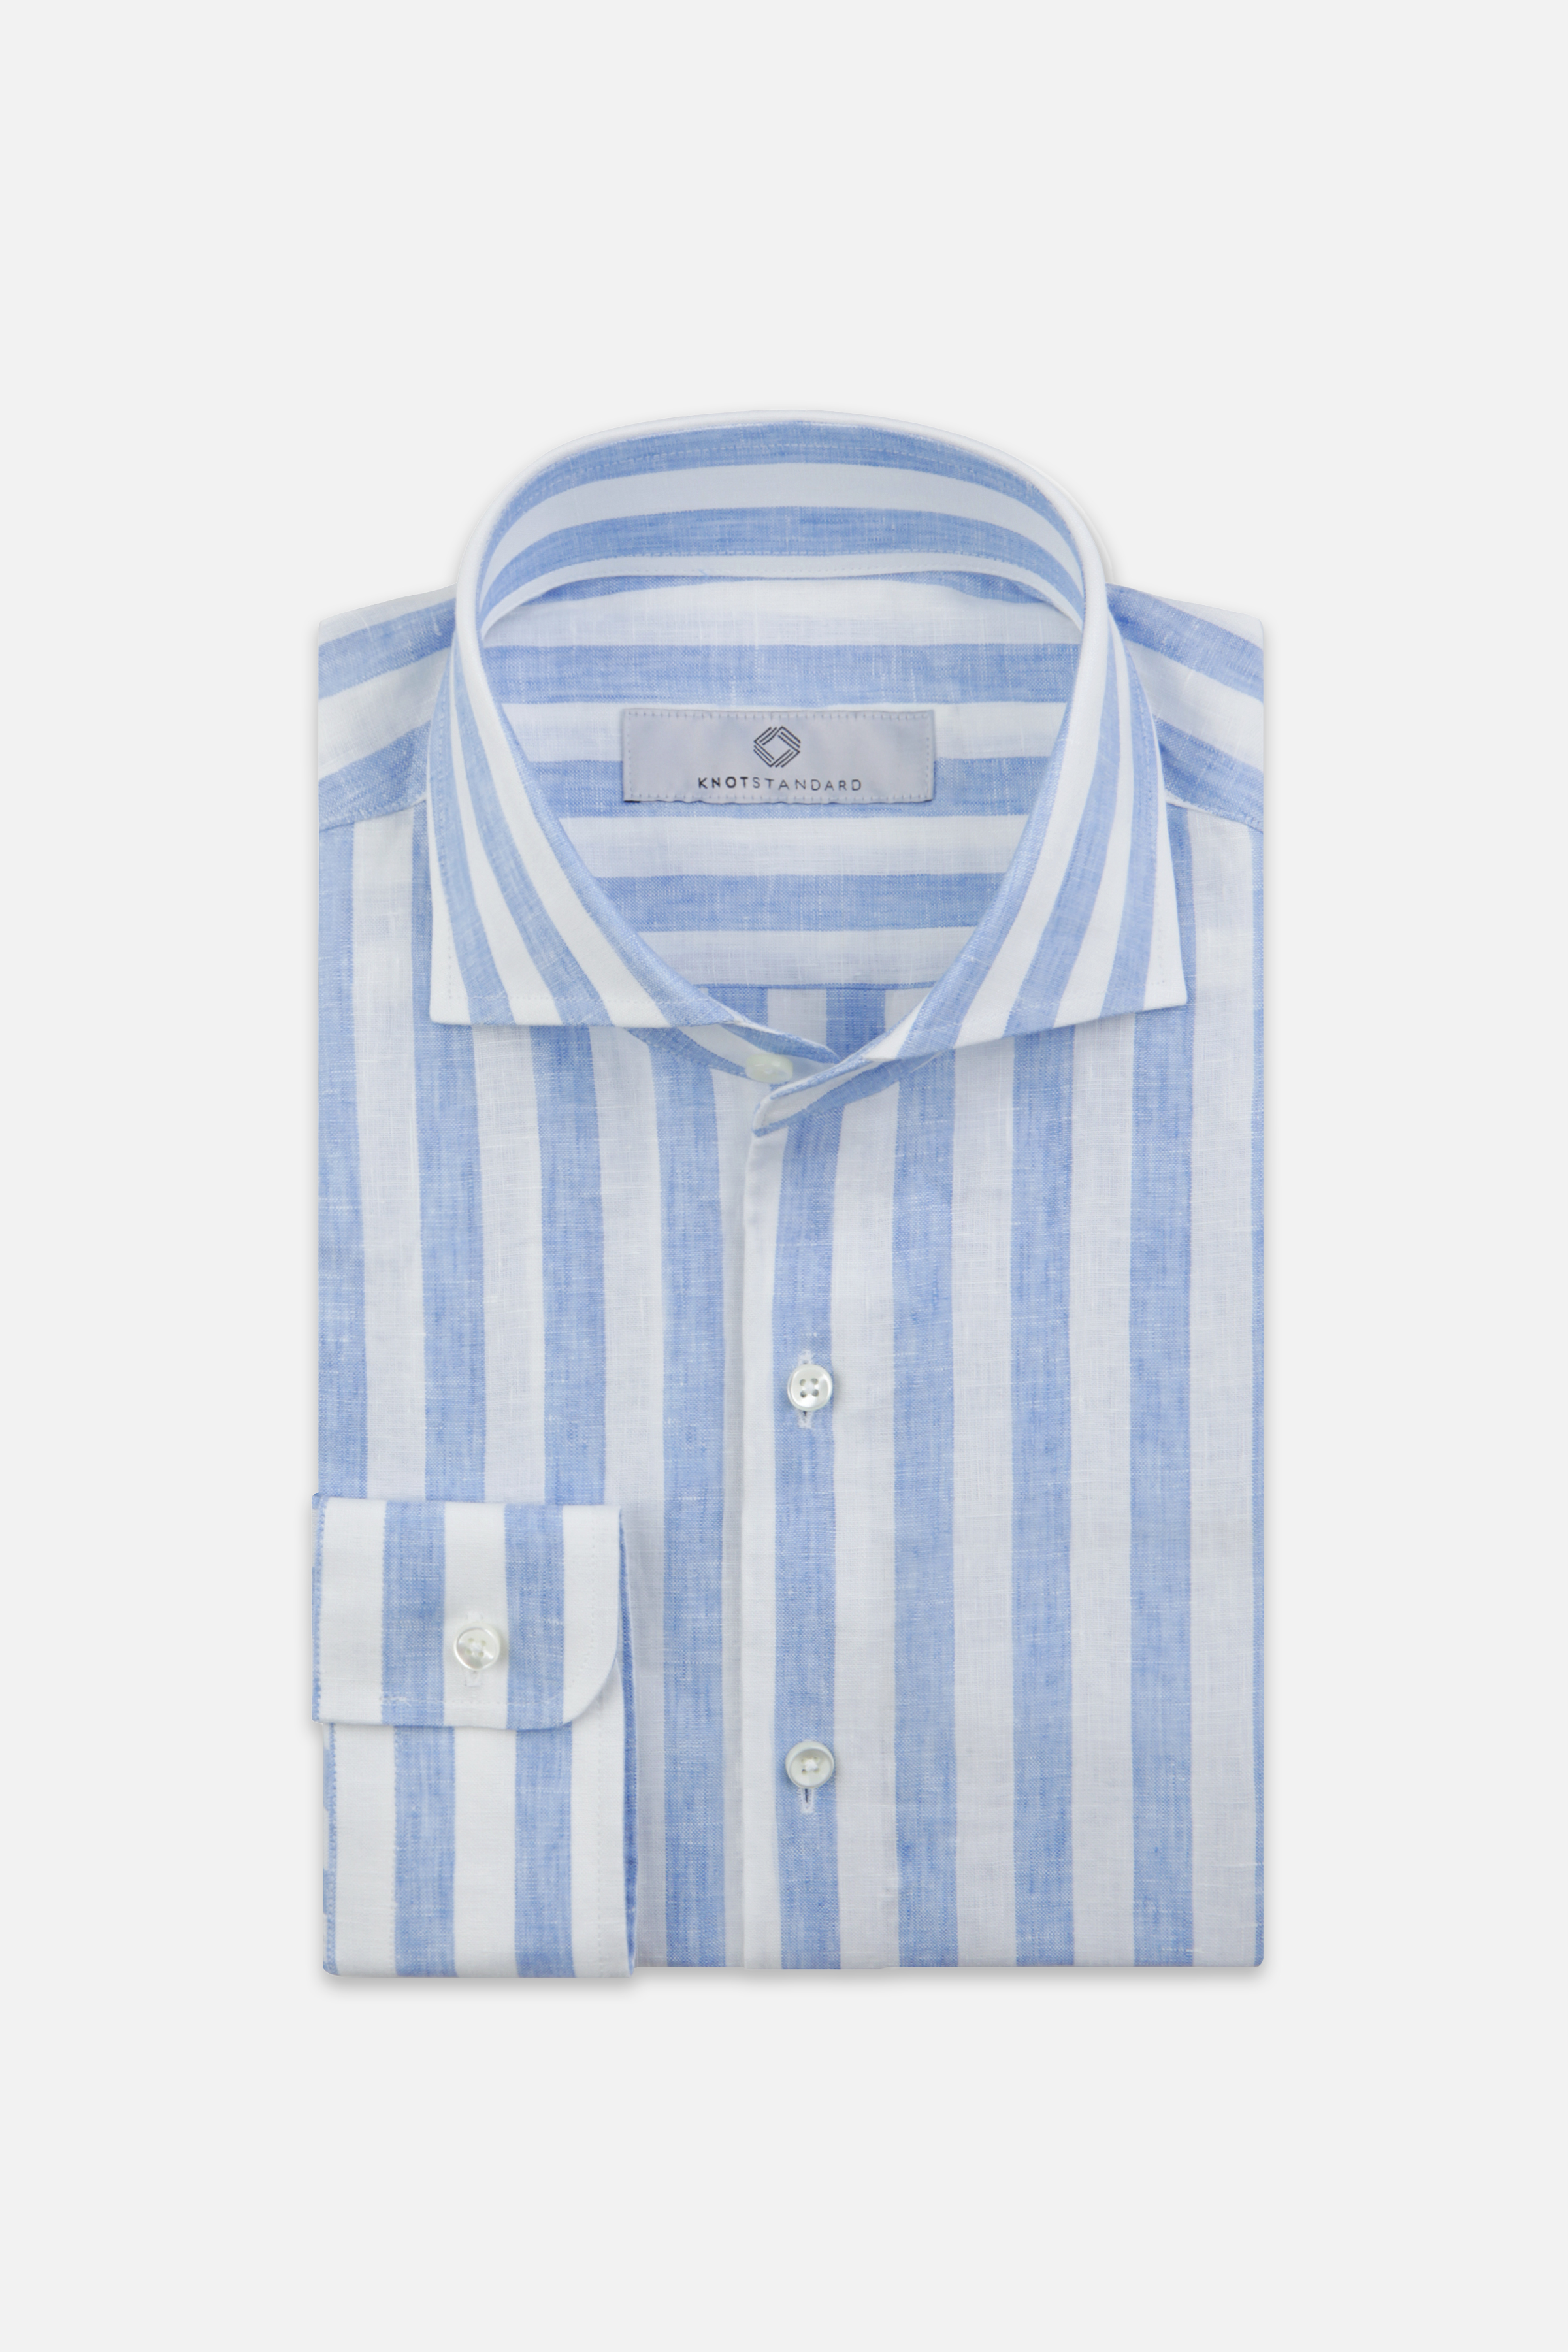 Solbiati Amalfi Blue Striped Linen Shirt by Knot Standard